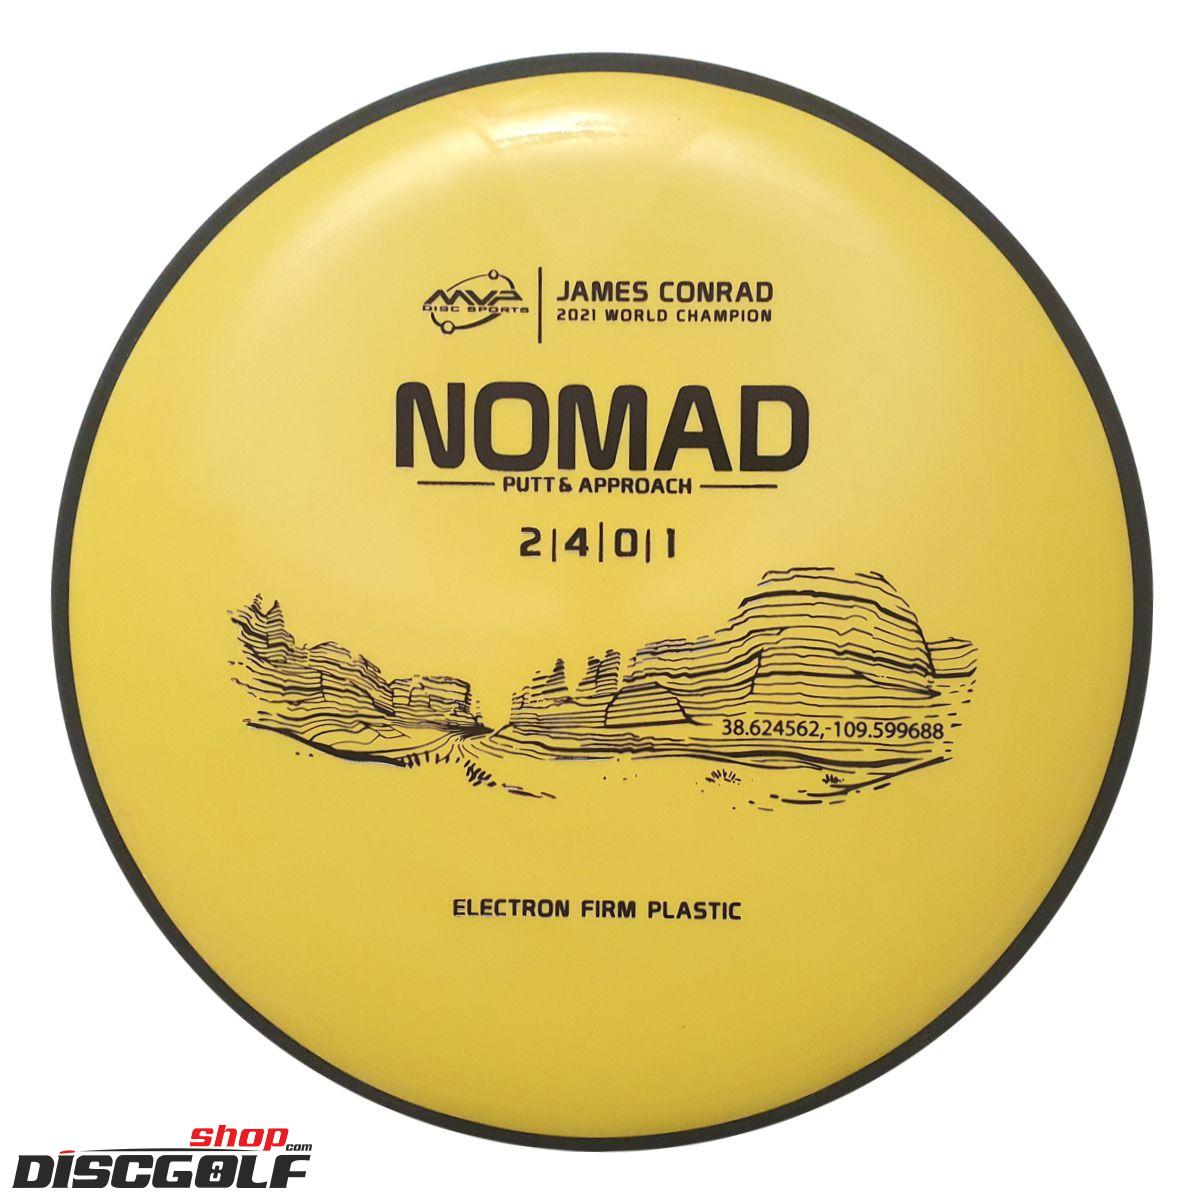 MVP Nomad Electron Firm James Conrad (discgolf)